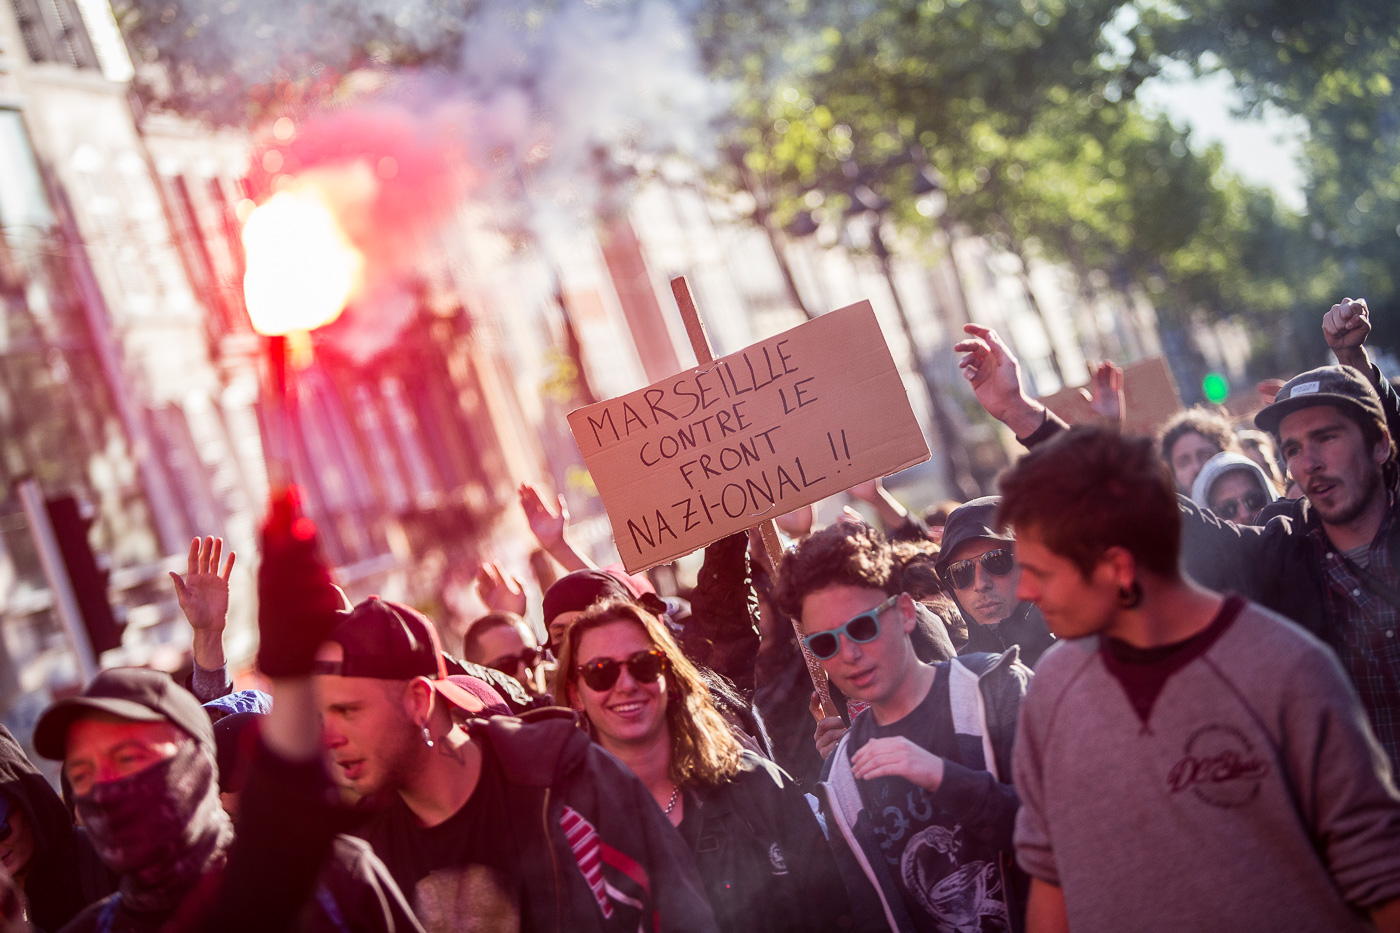 Activistes antifeixistes manifestant-se a Marsella contra el Front National